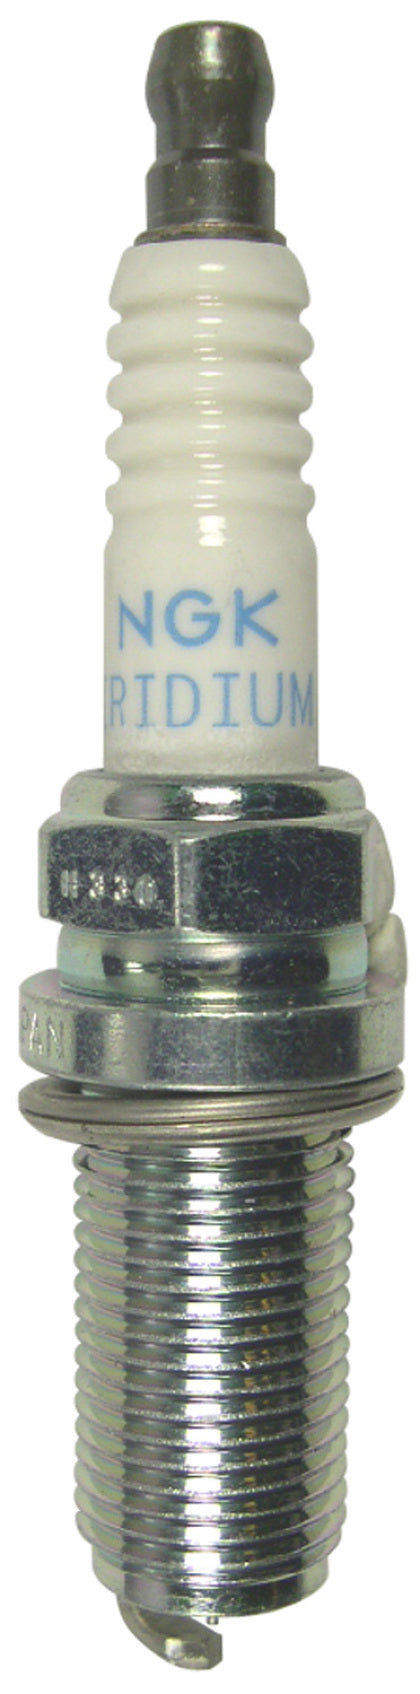 NGK Iridium Racing Evo 9 One Step Colder Spark Plug (R7437-8) Box of 4